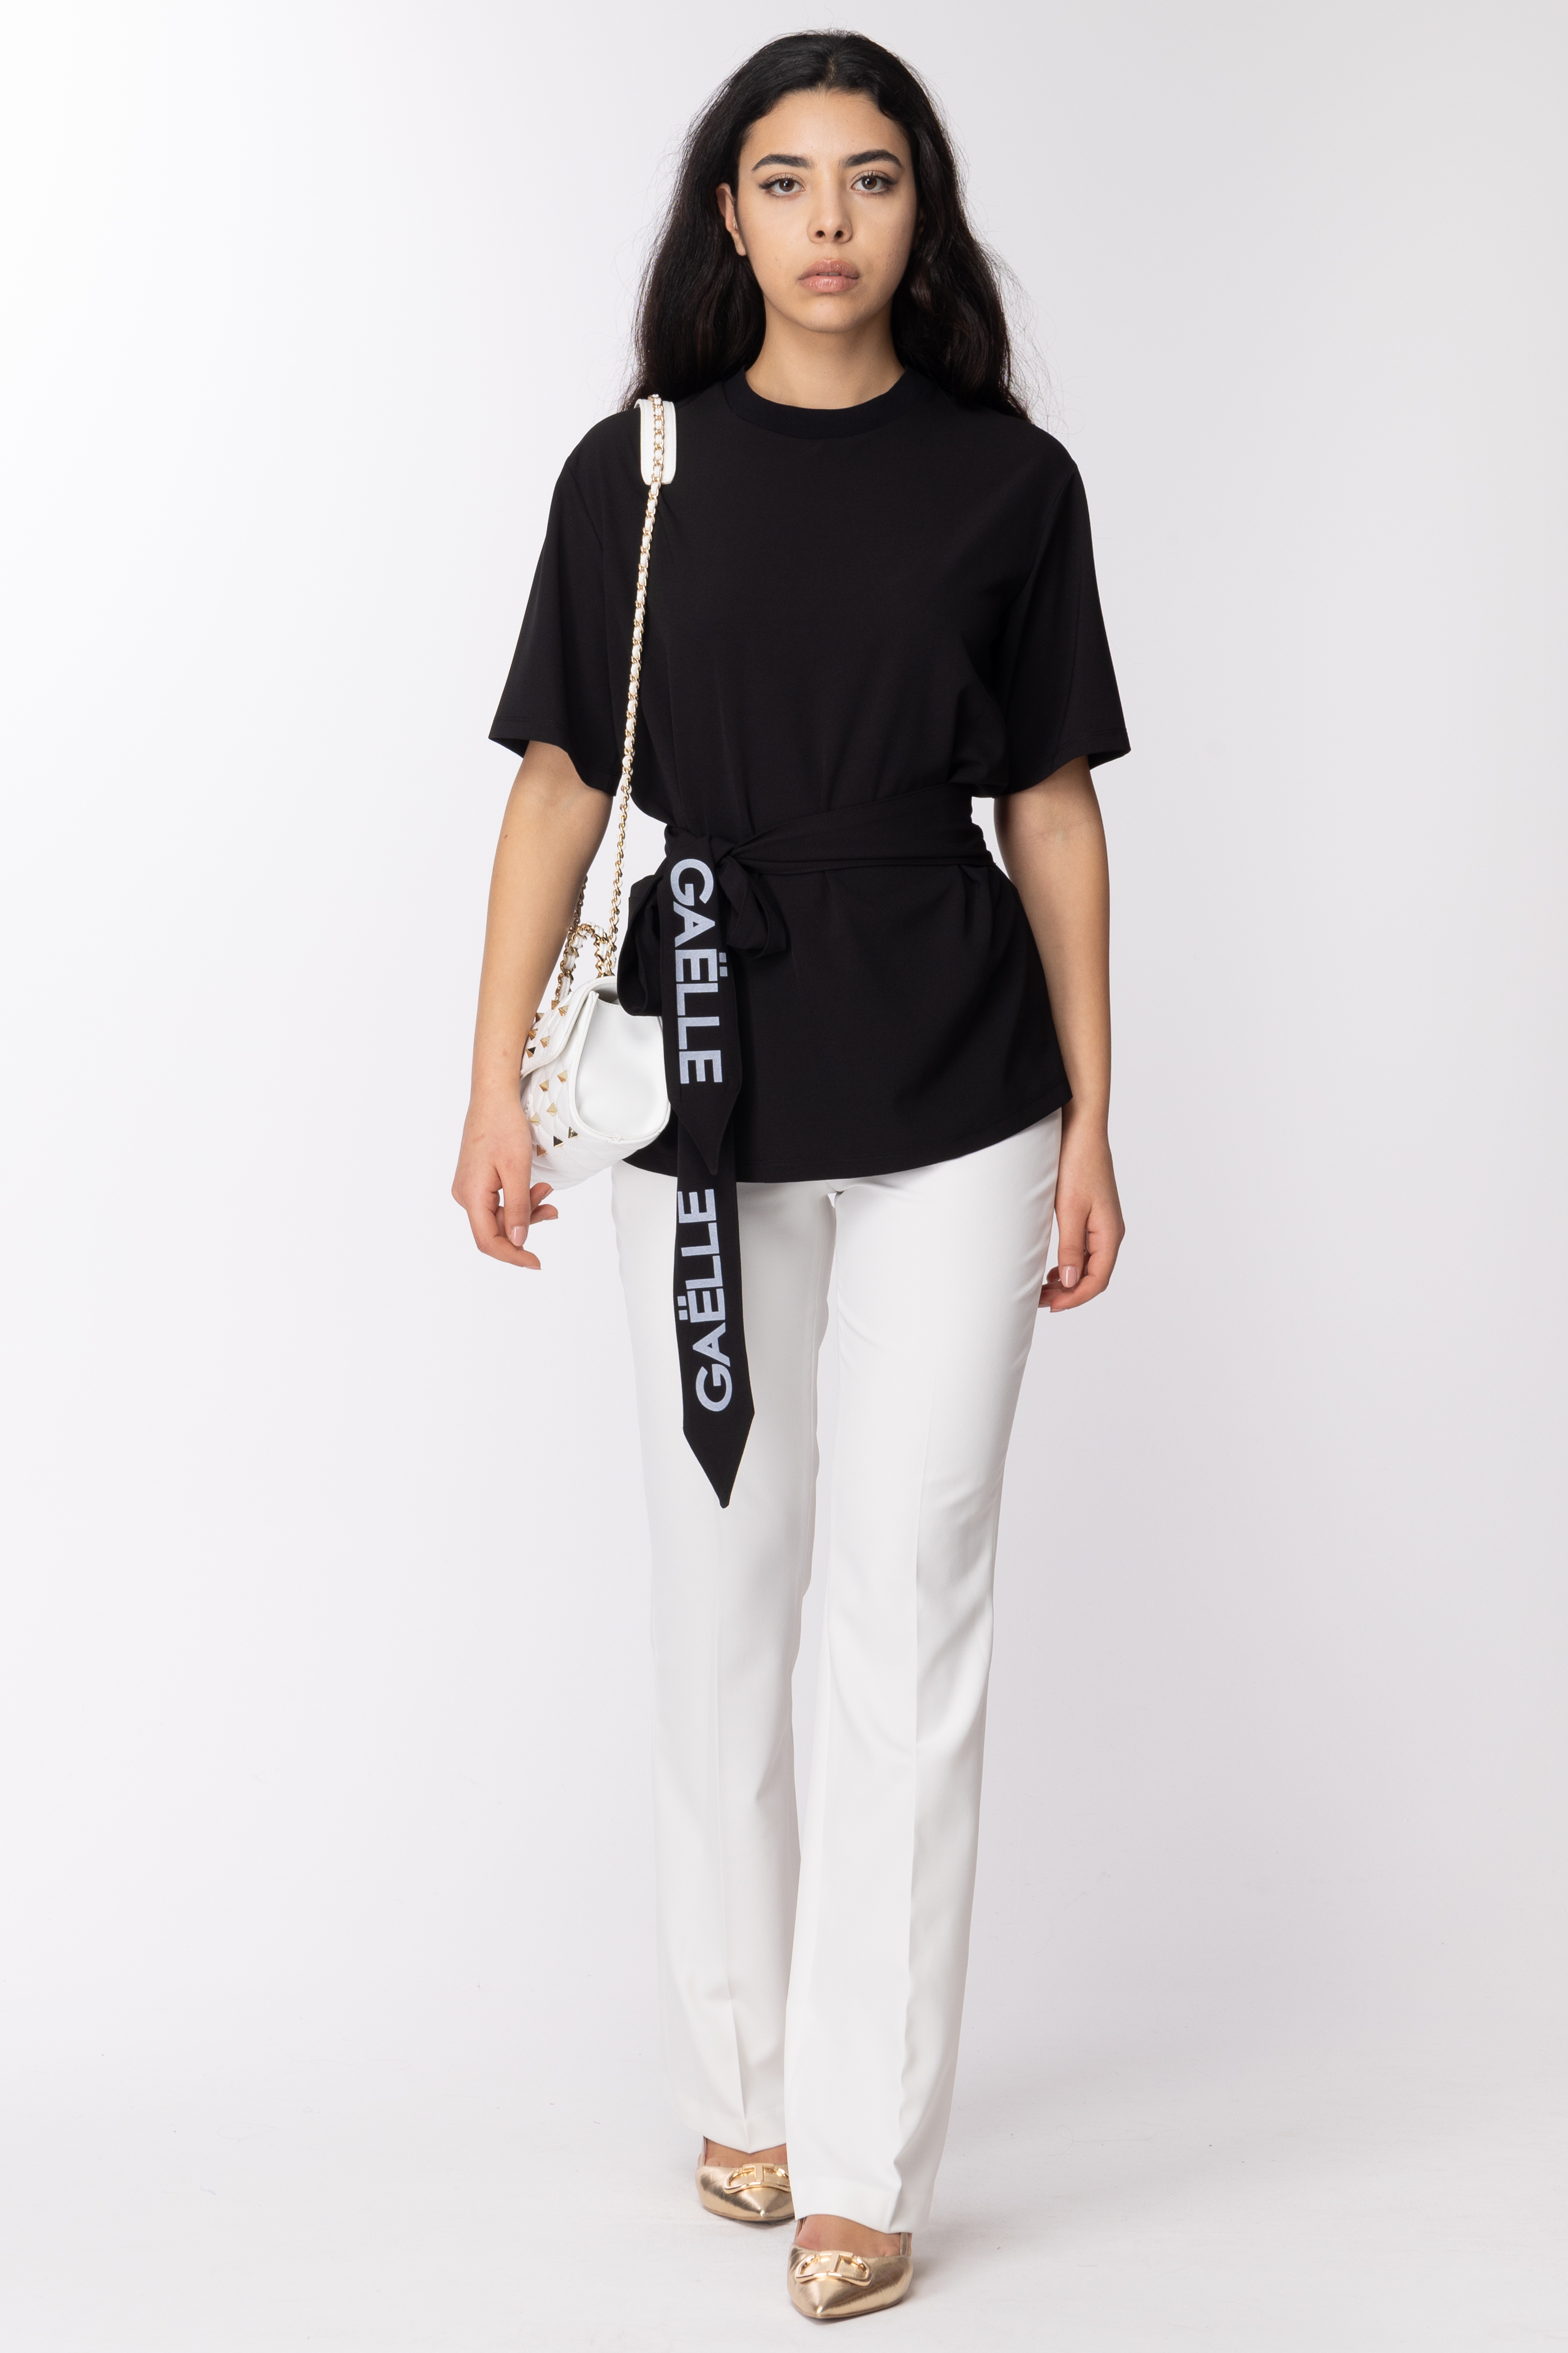 Anteprima: Gaelle Paris T-shirt con fusciacca logata Nero